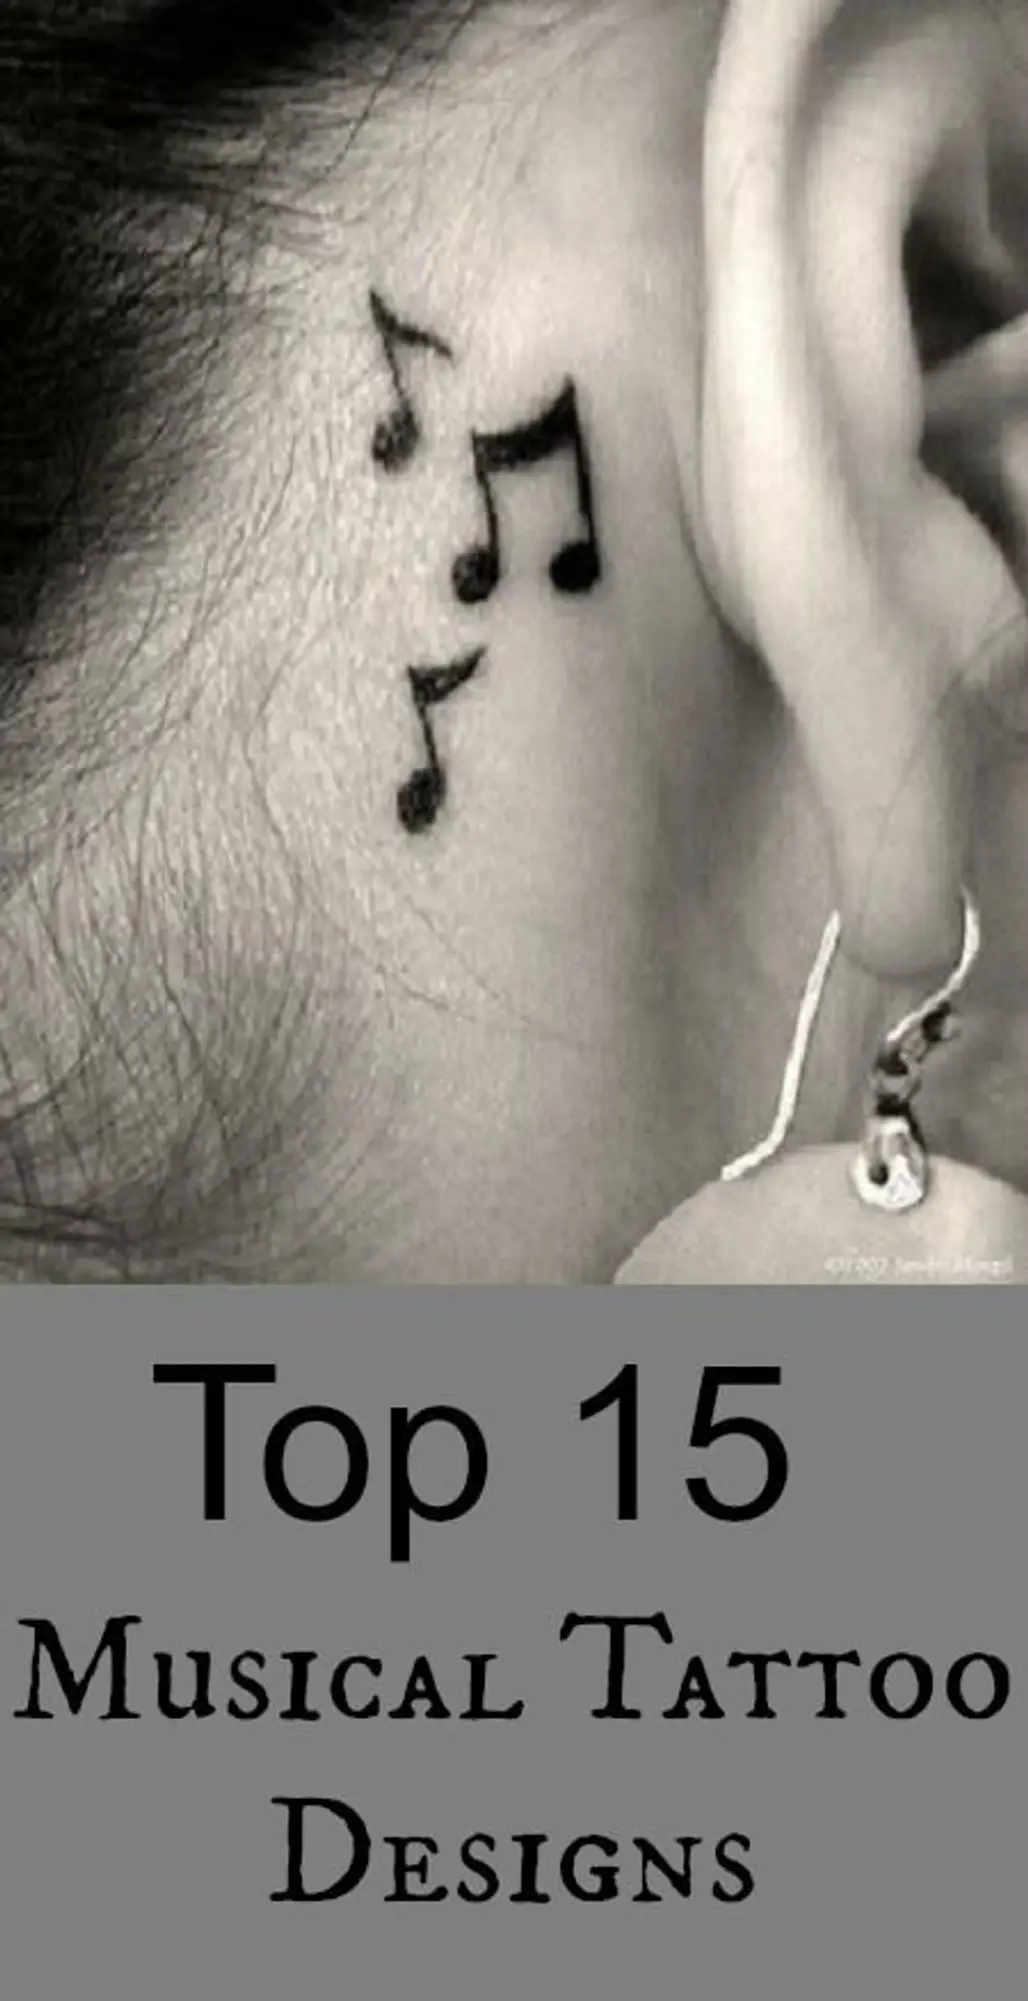 Music Heart Temporary Tattoo - Set of 3 – Little Tattoos